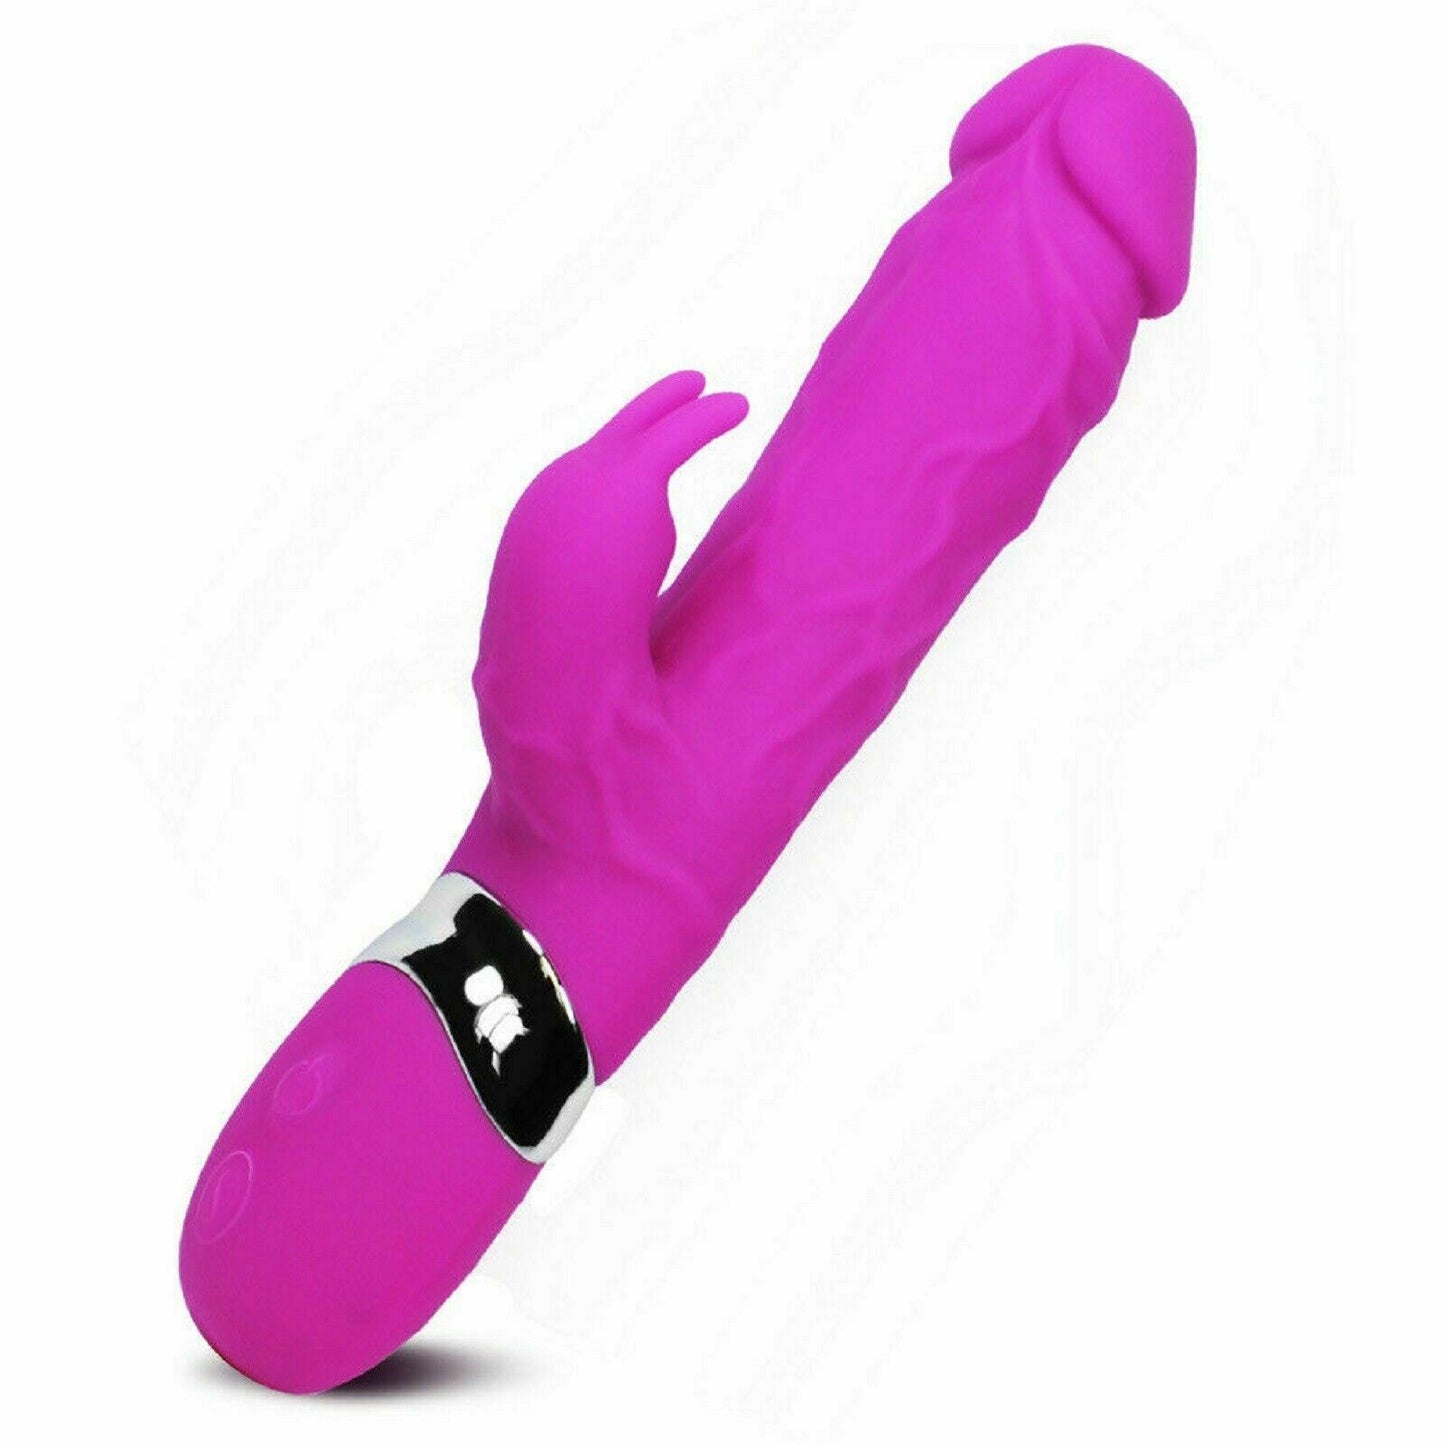 9" Large Rabbit Vibrator Big Realistic Dildo Clit USB Rechargeable Wand Sex Toy